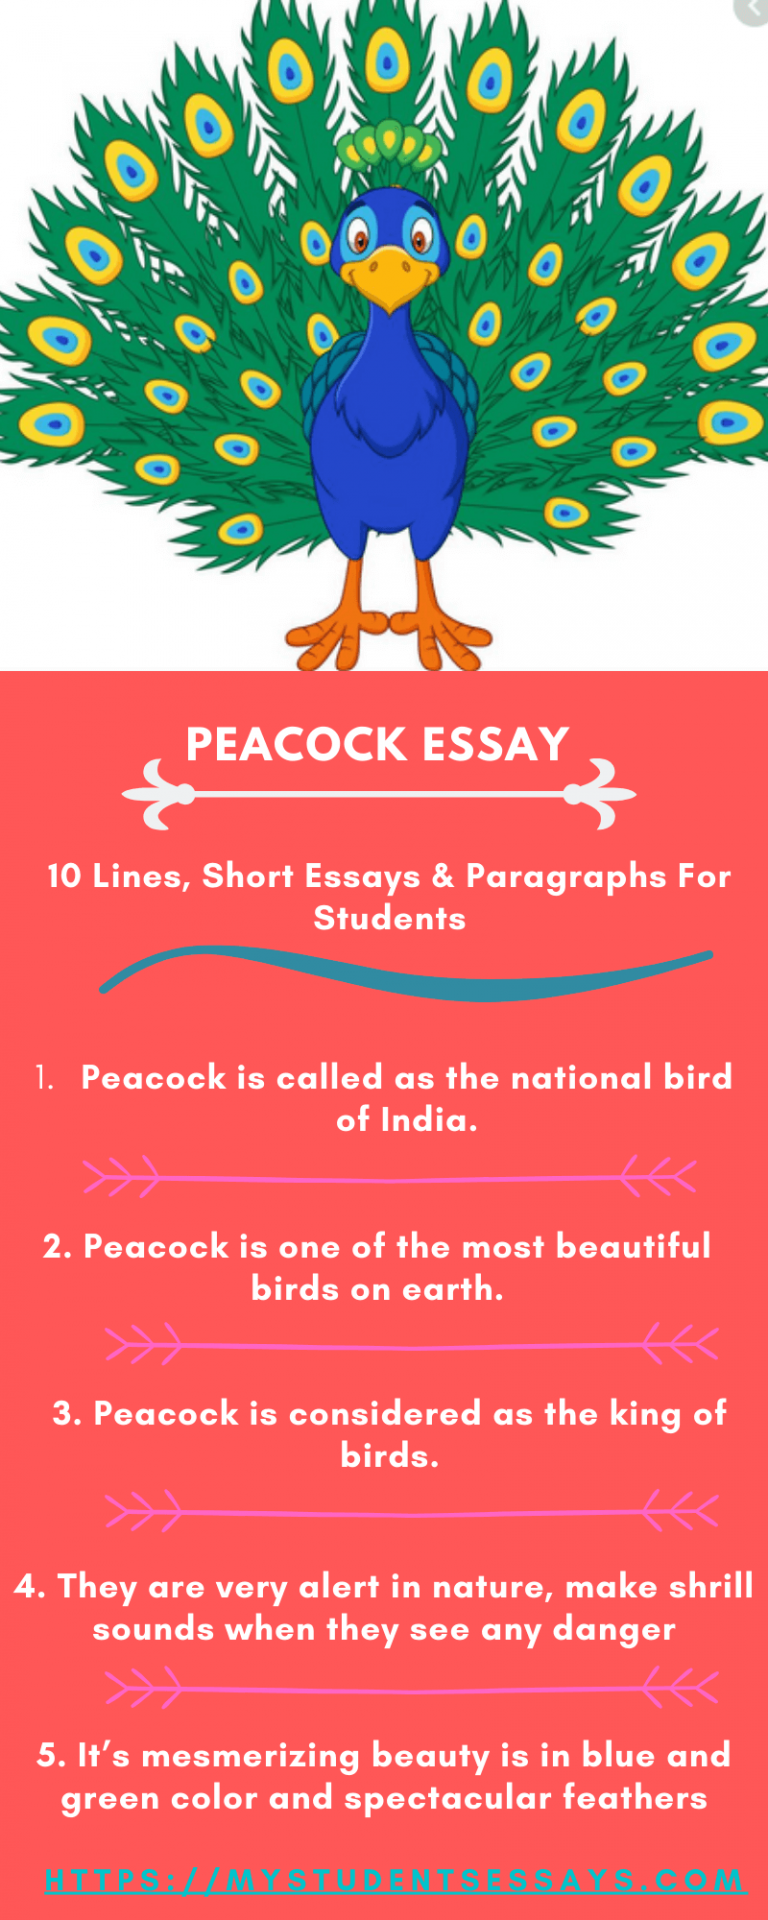 peacock easy essay in english